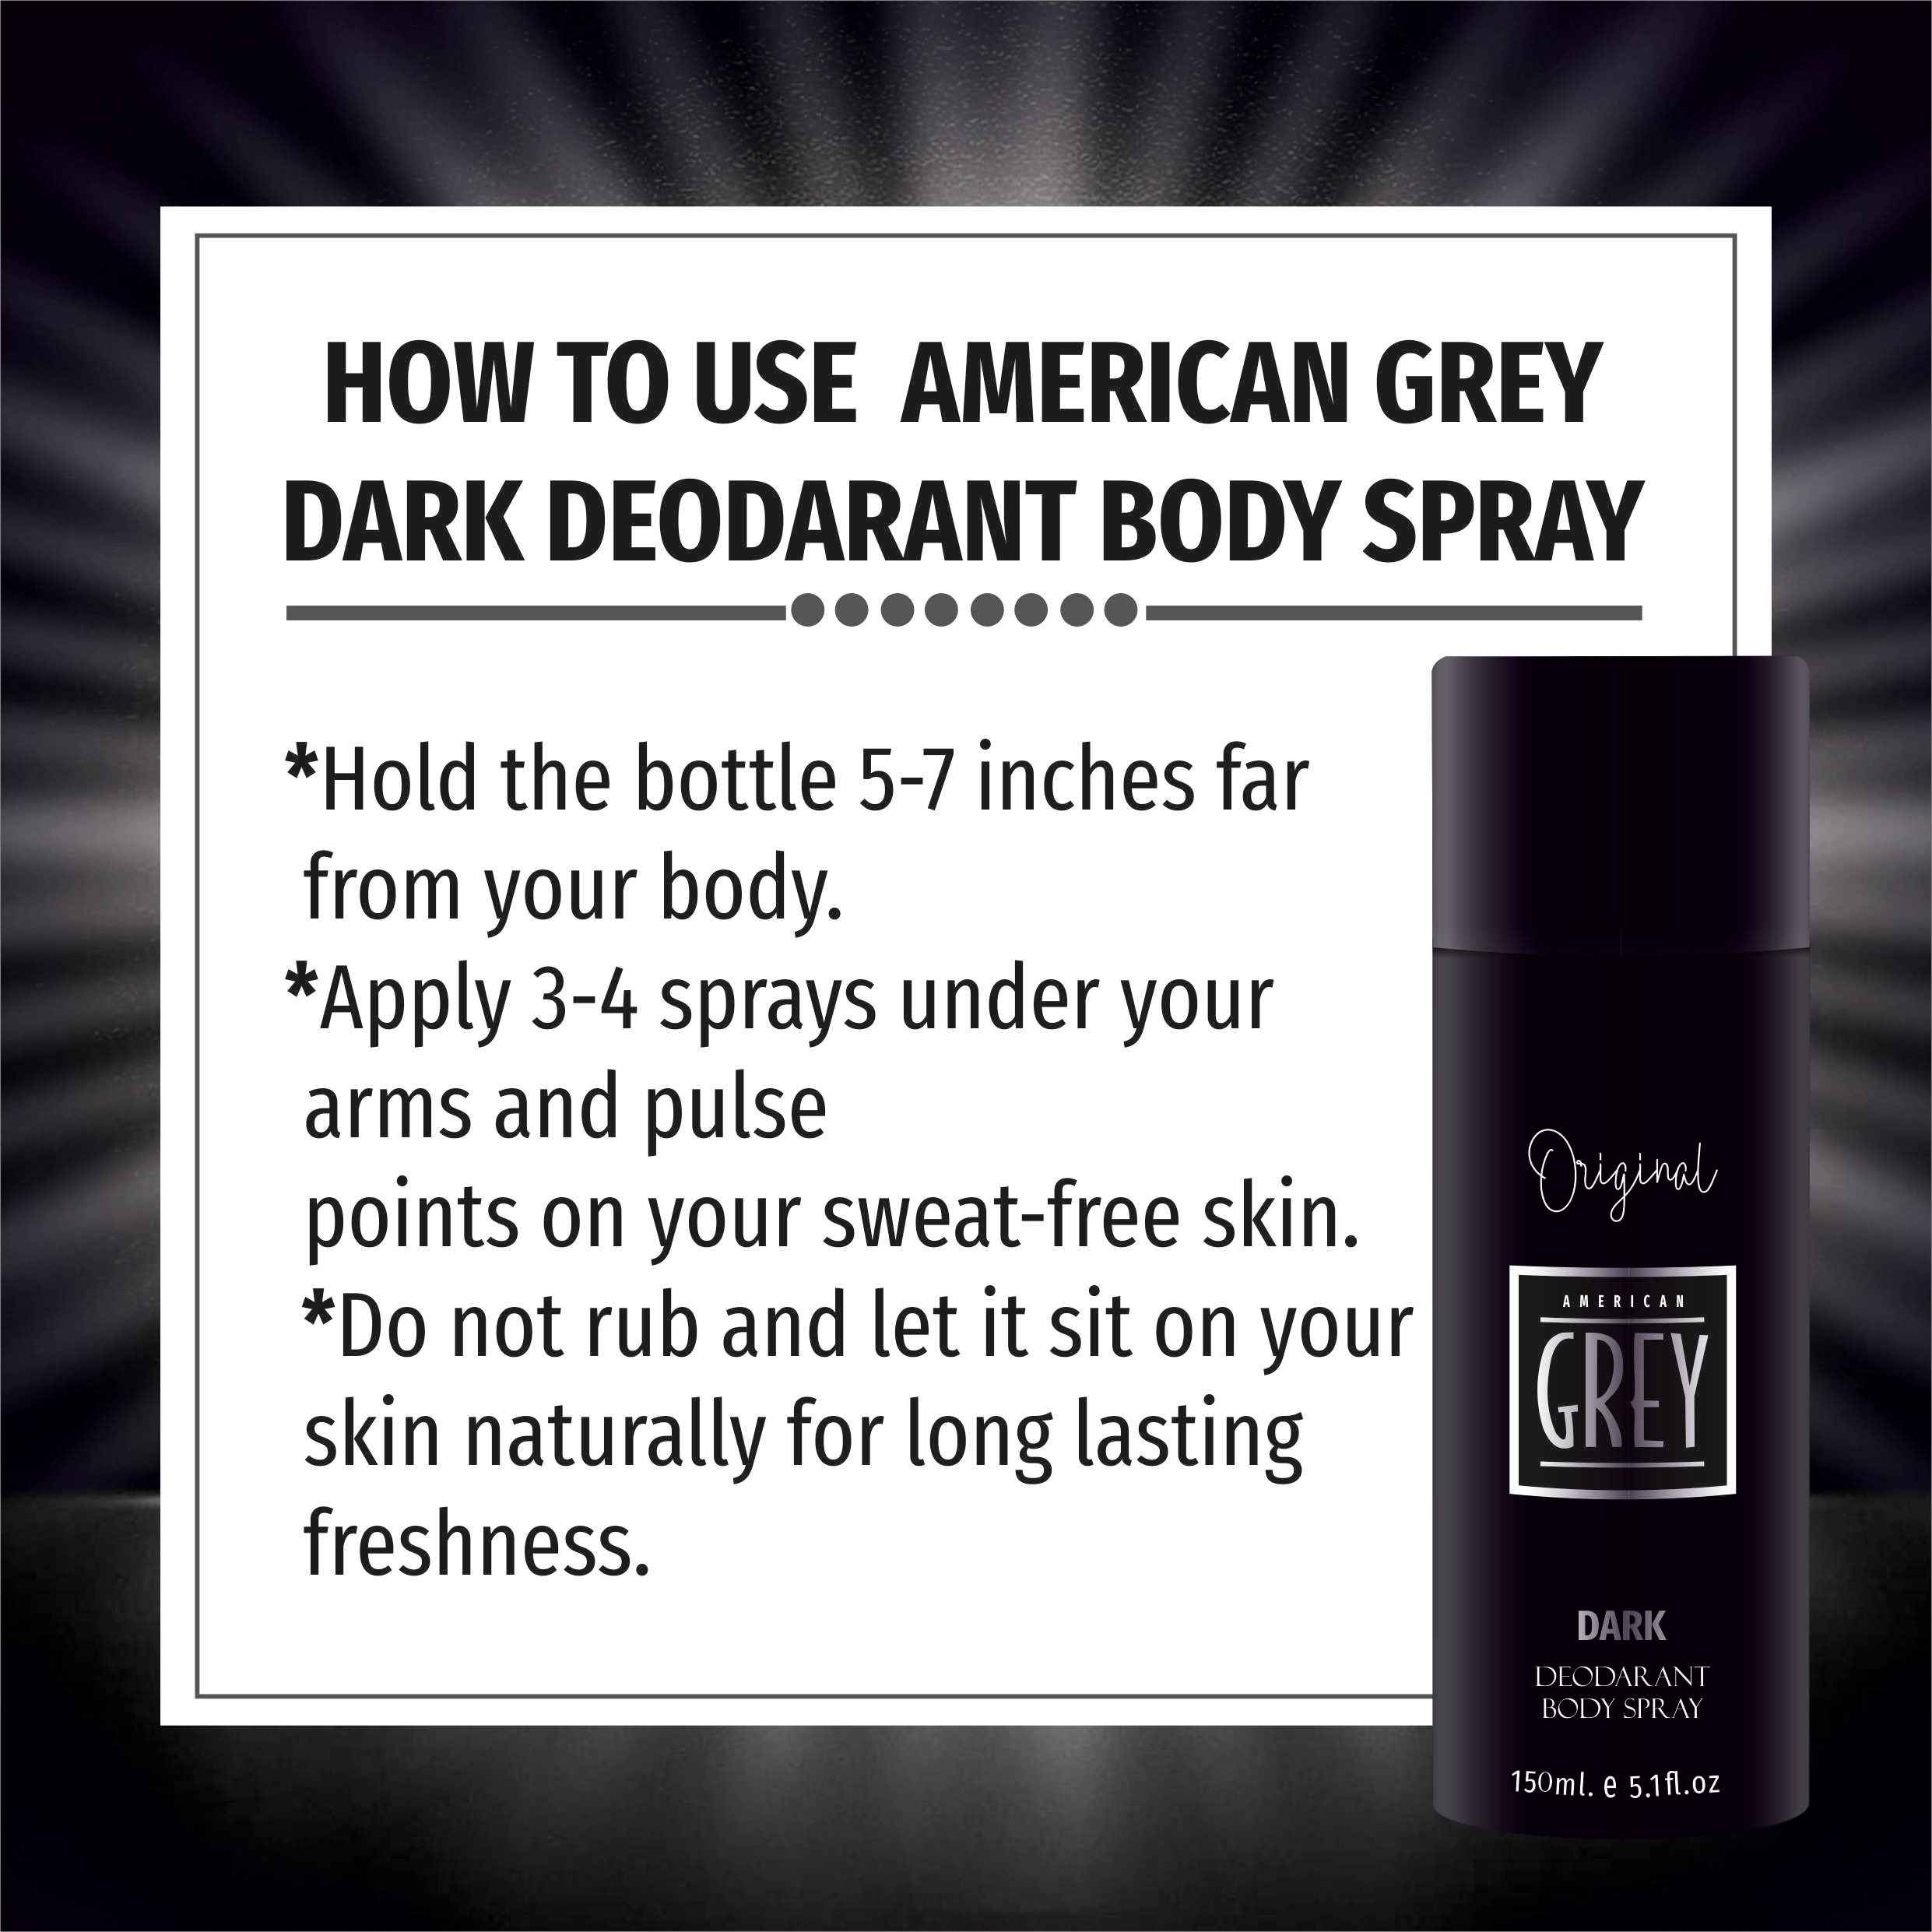 How do you use deodorant spray?